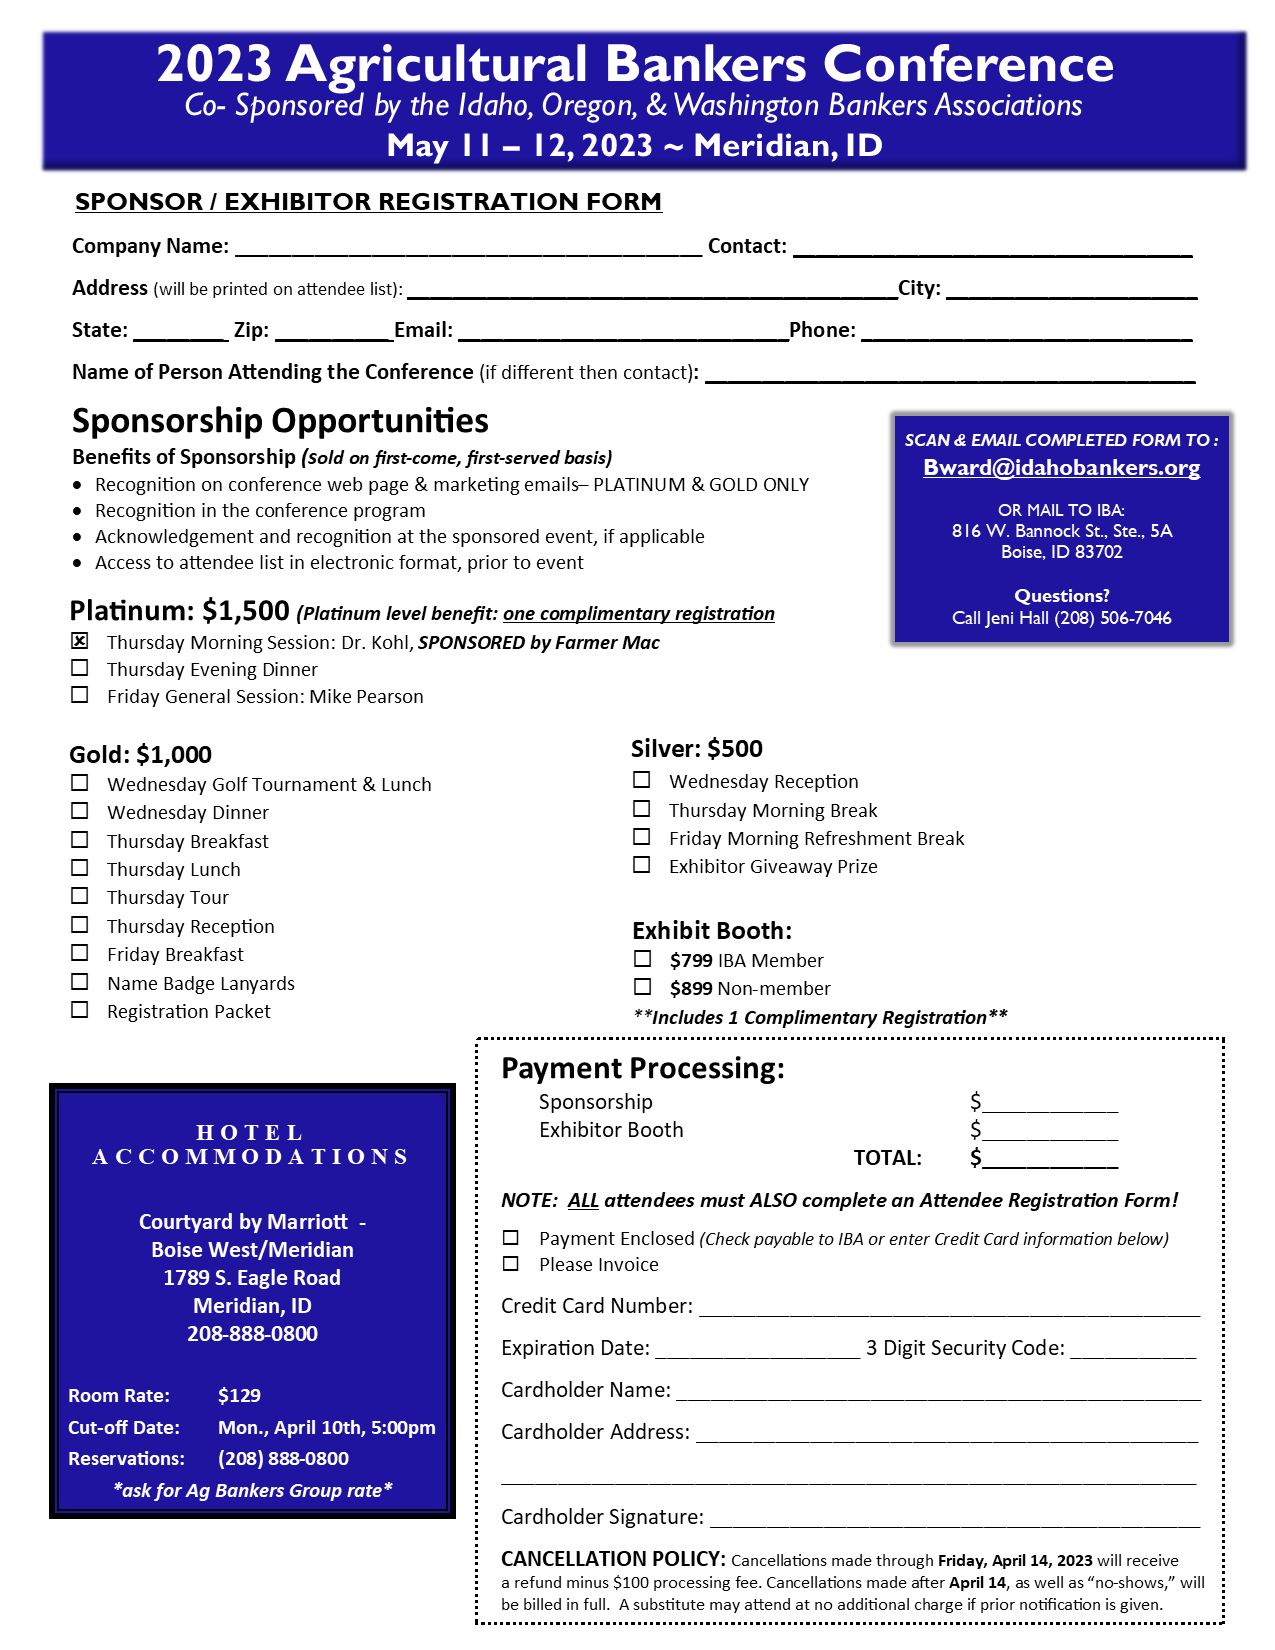 Exhibitor & Sponsor Registration Form.